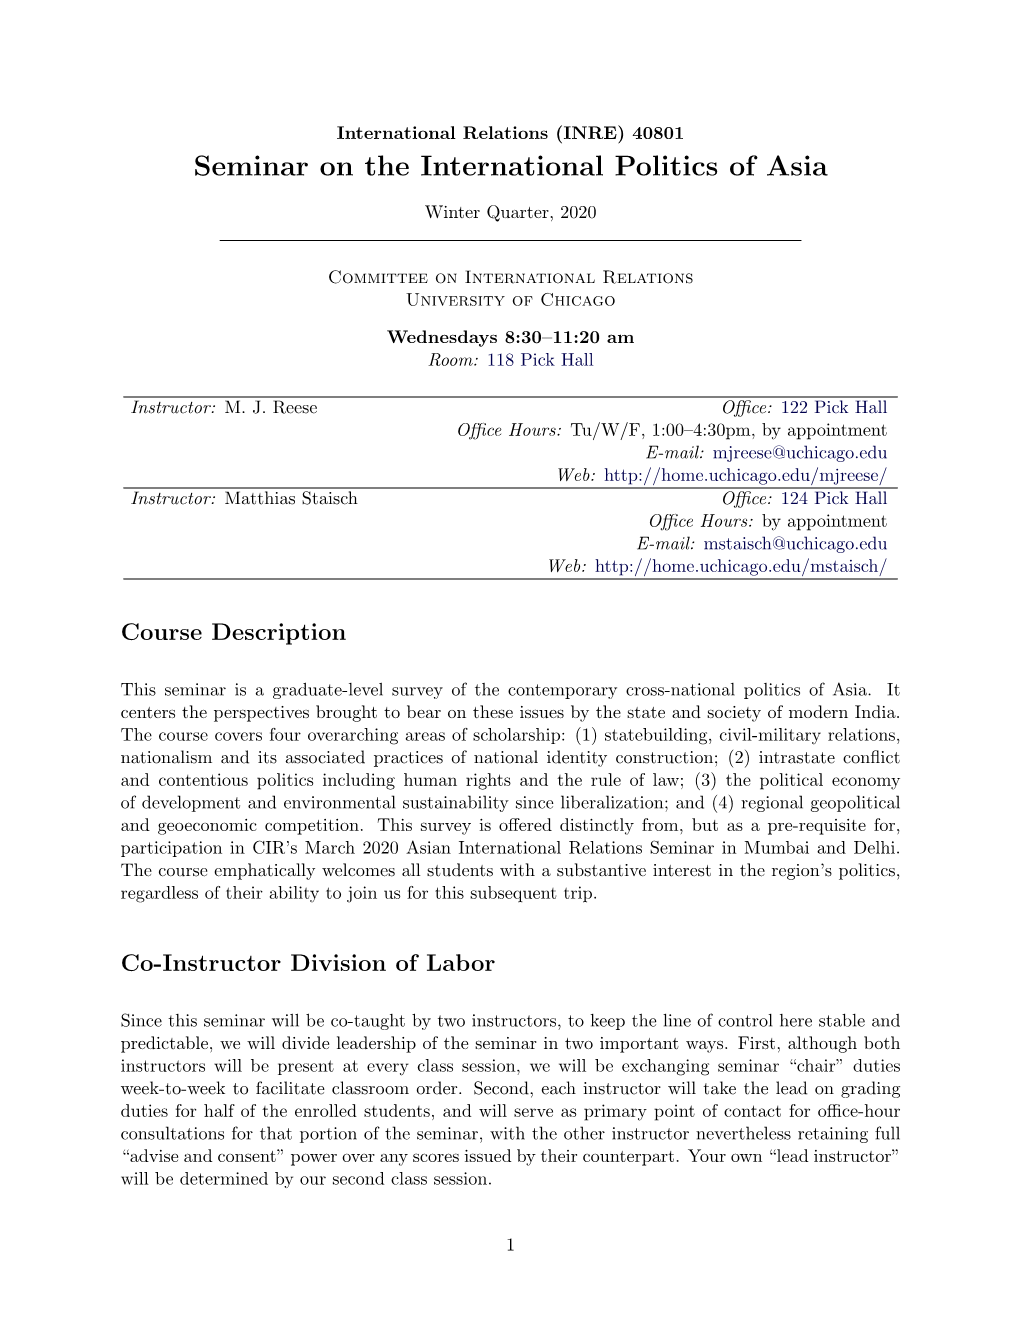 Seminar on the International Politics of Asia